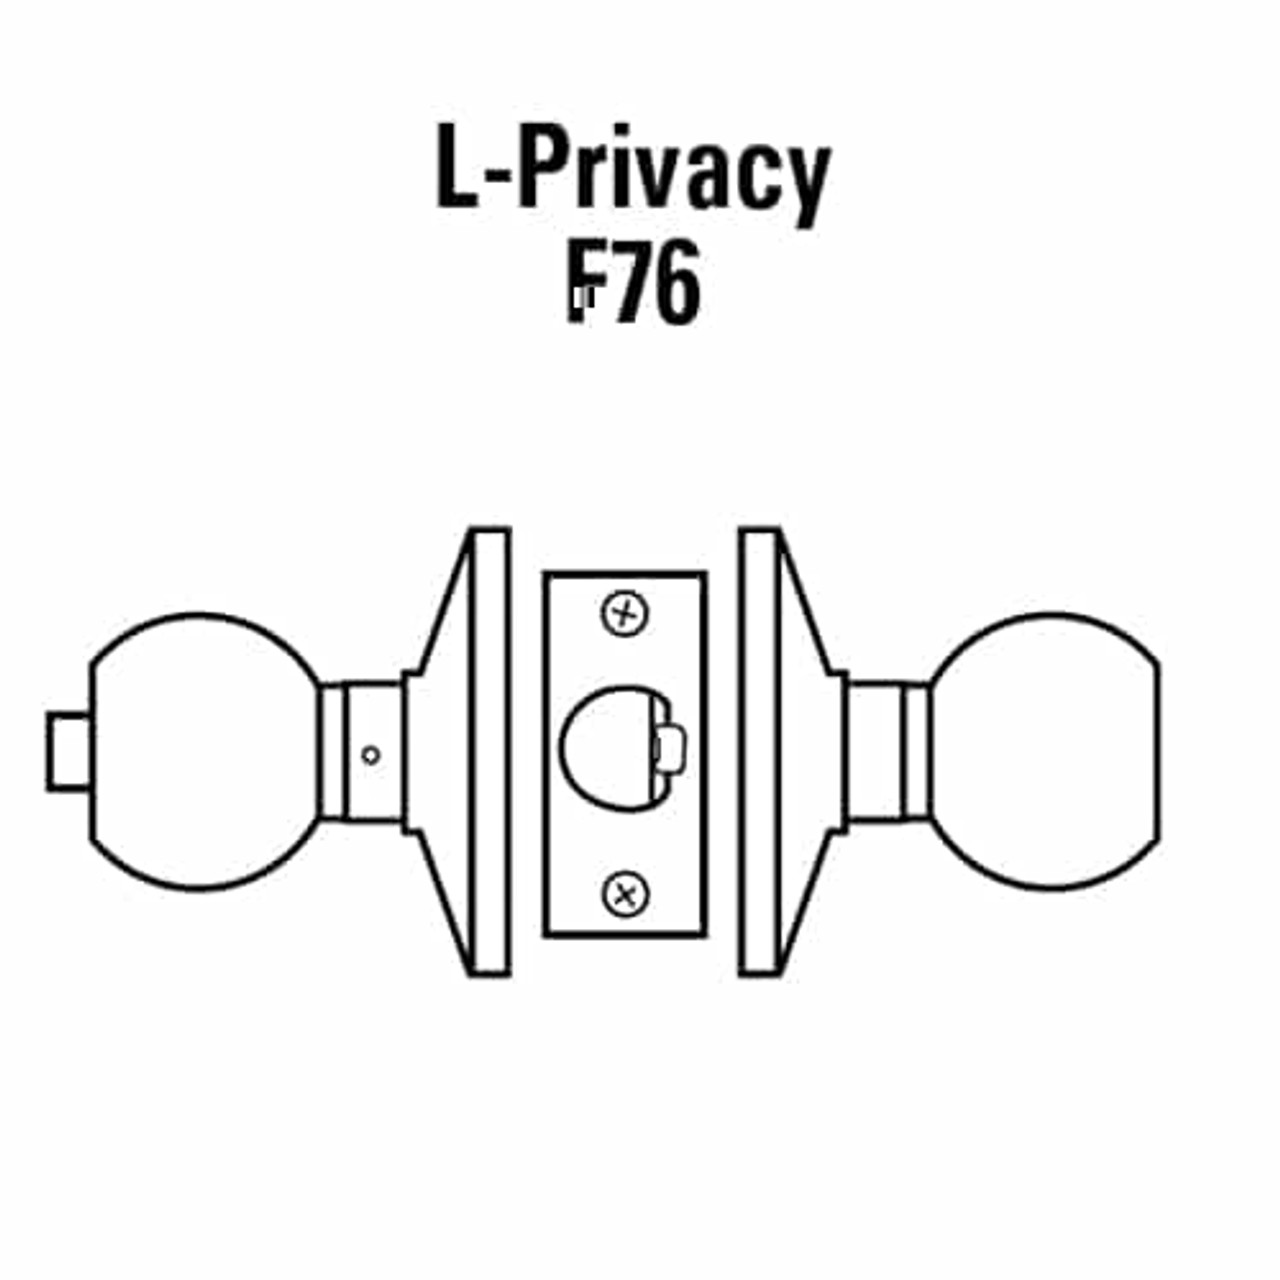 6K30L4CSTK625 Best 6K Series Privacy Medium Duty Cylindrical Knob Locks with Round Style in Bright Chrome